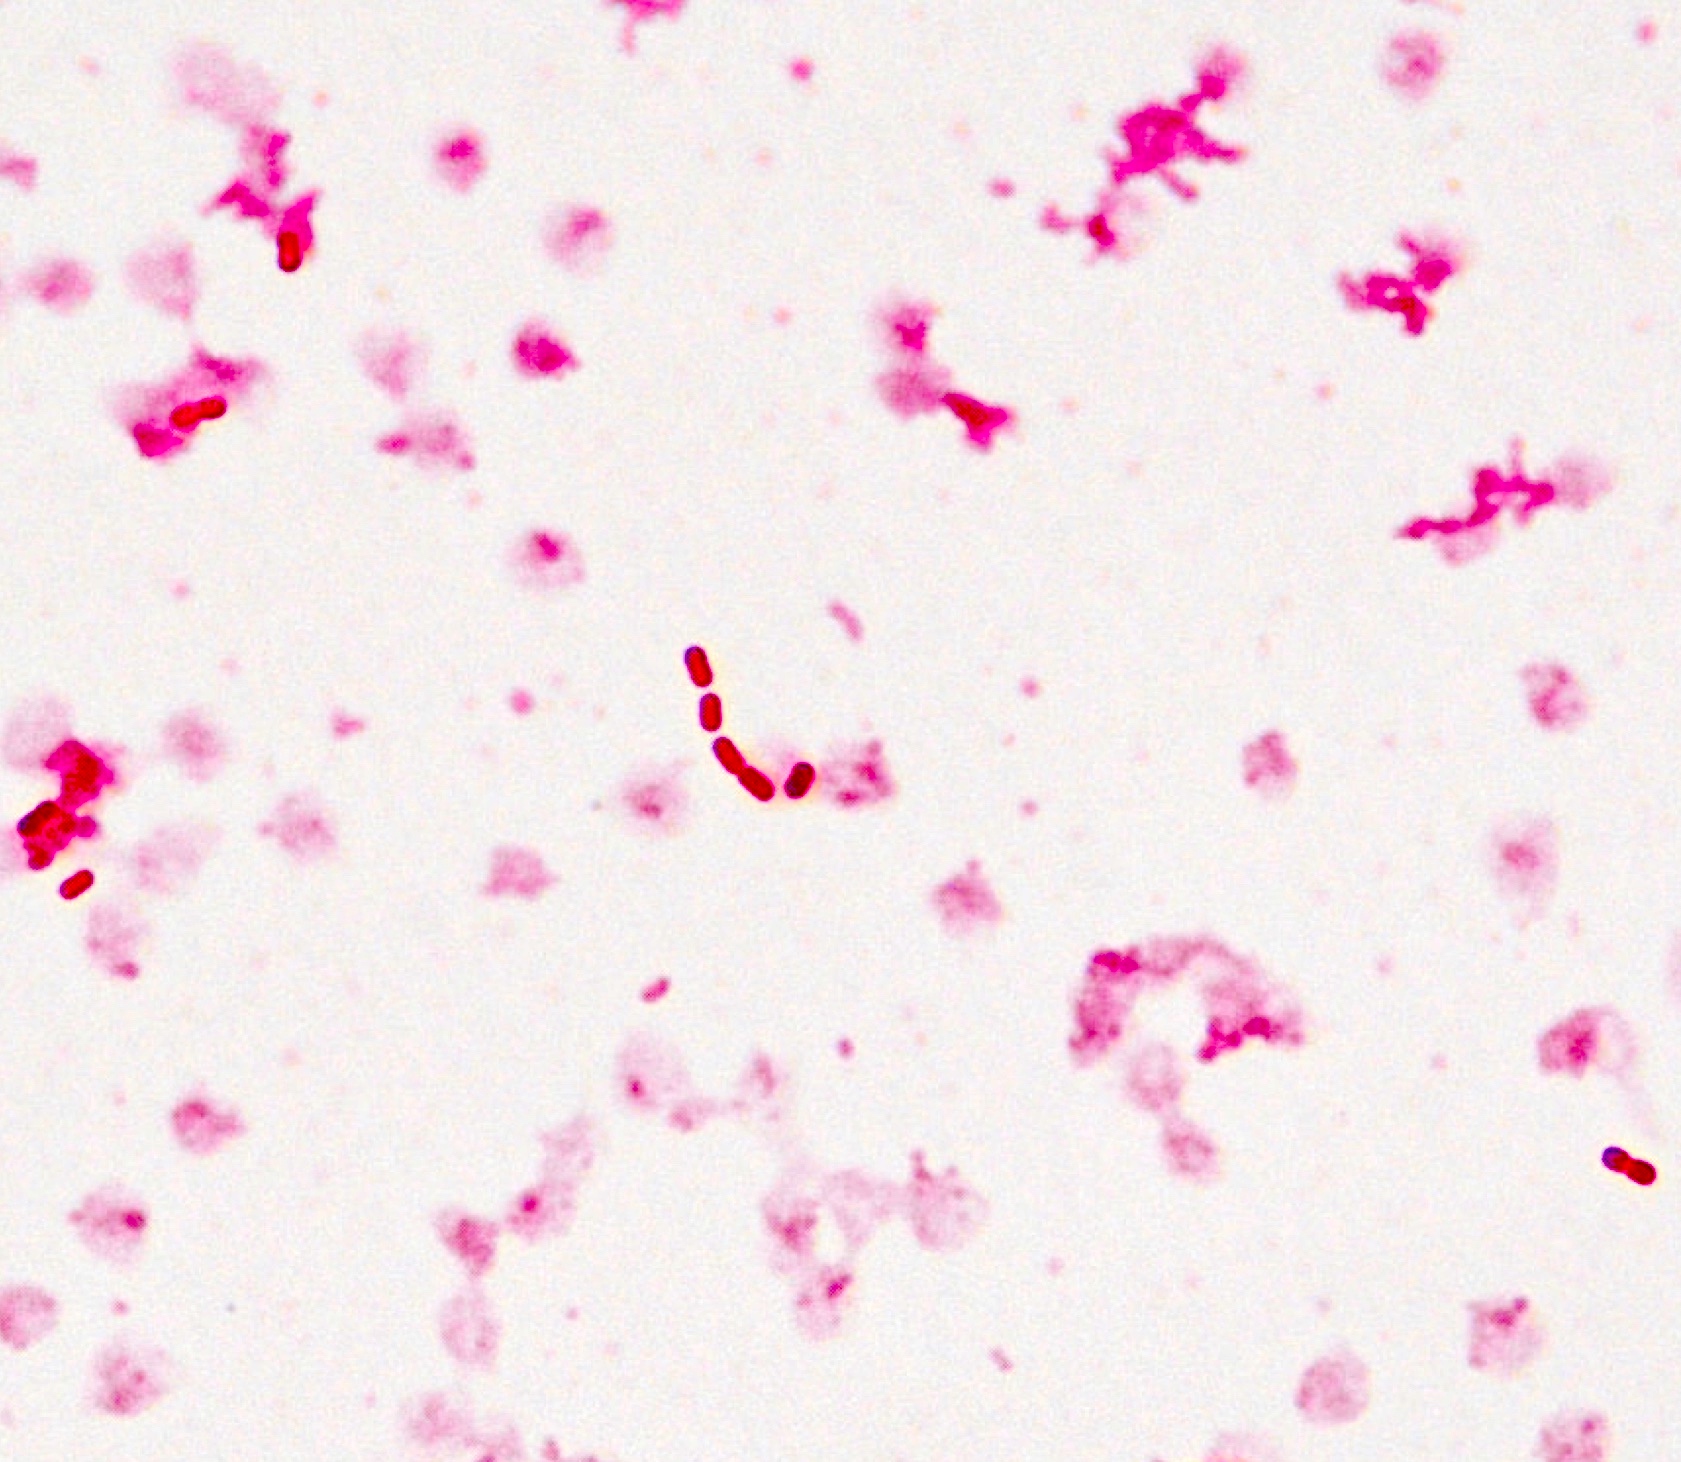 klebsiella pneumoniae capsule stain 100x